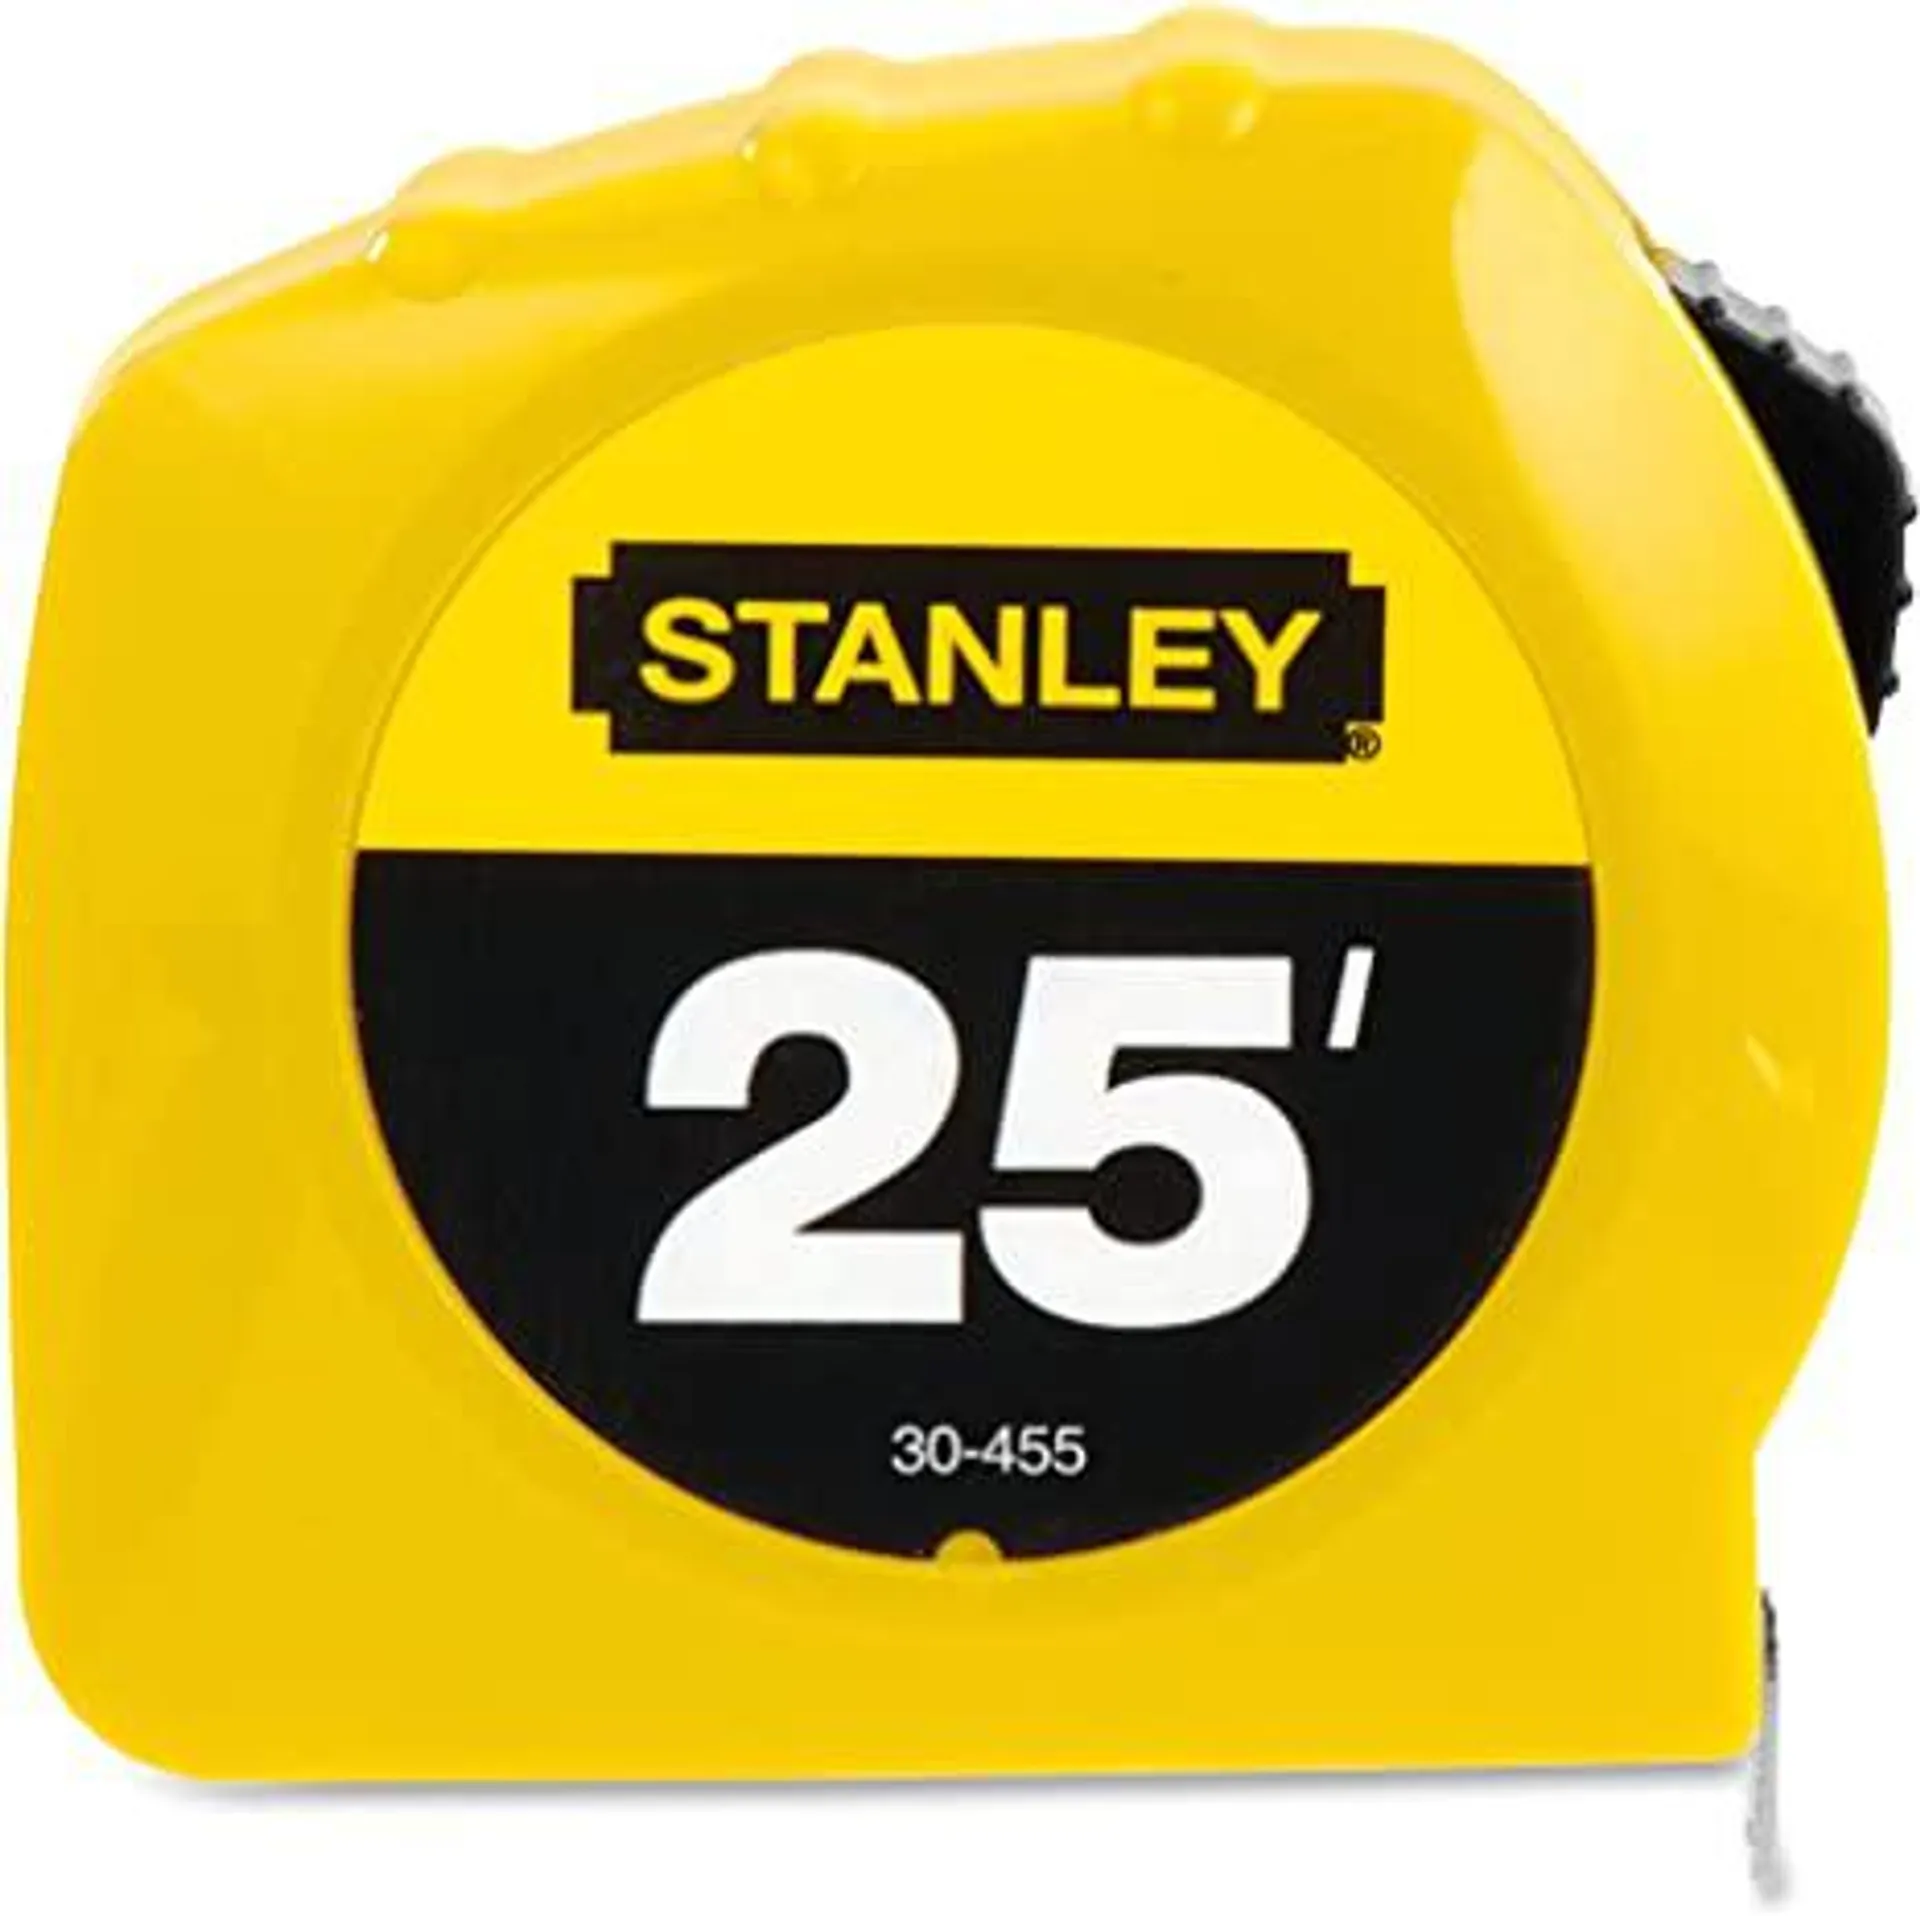 Stanley 30455 Power Return Tape Measure, Plastic Case, 1-Inch x 25ft, Yellow